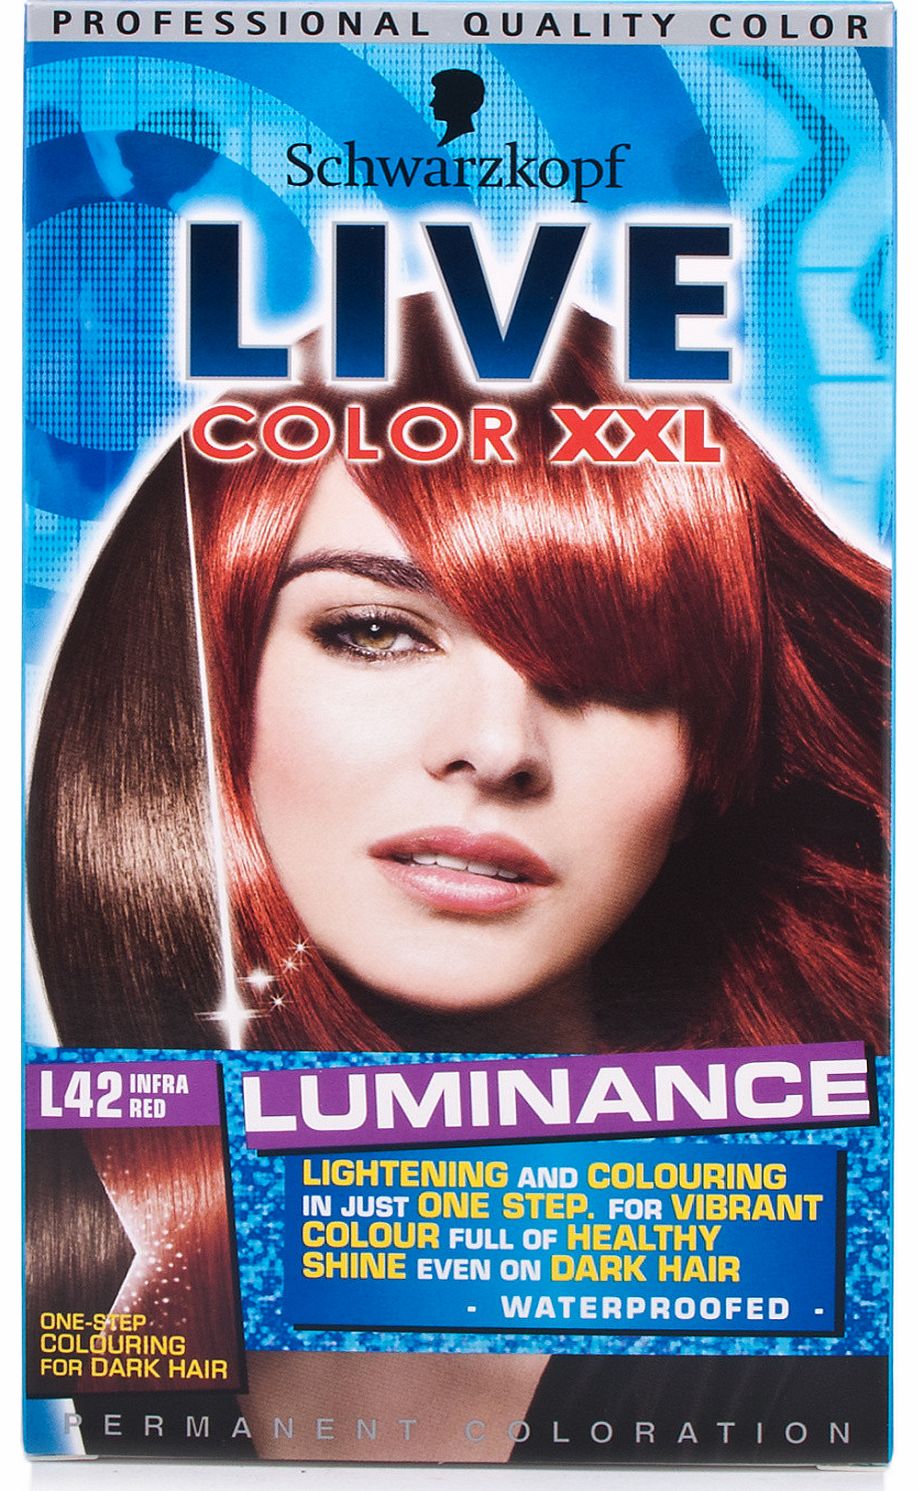 Schwarzkopf Live Colour XXL Luminance L42 Infra